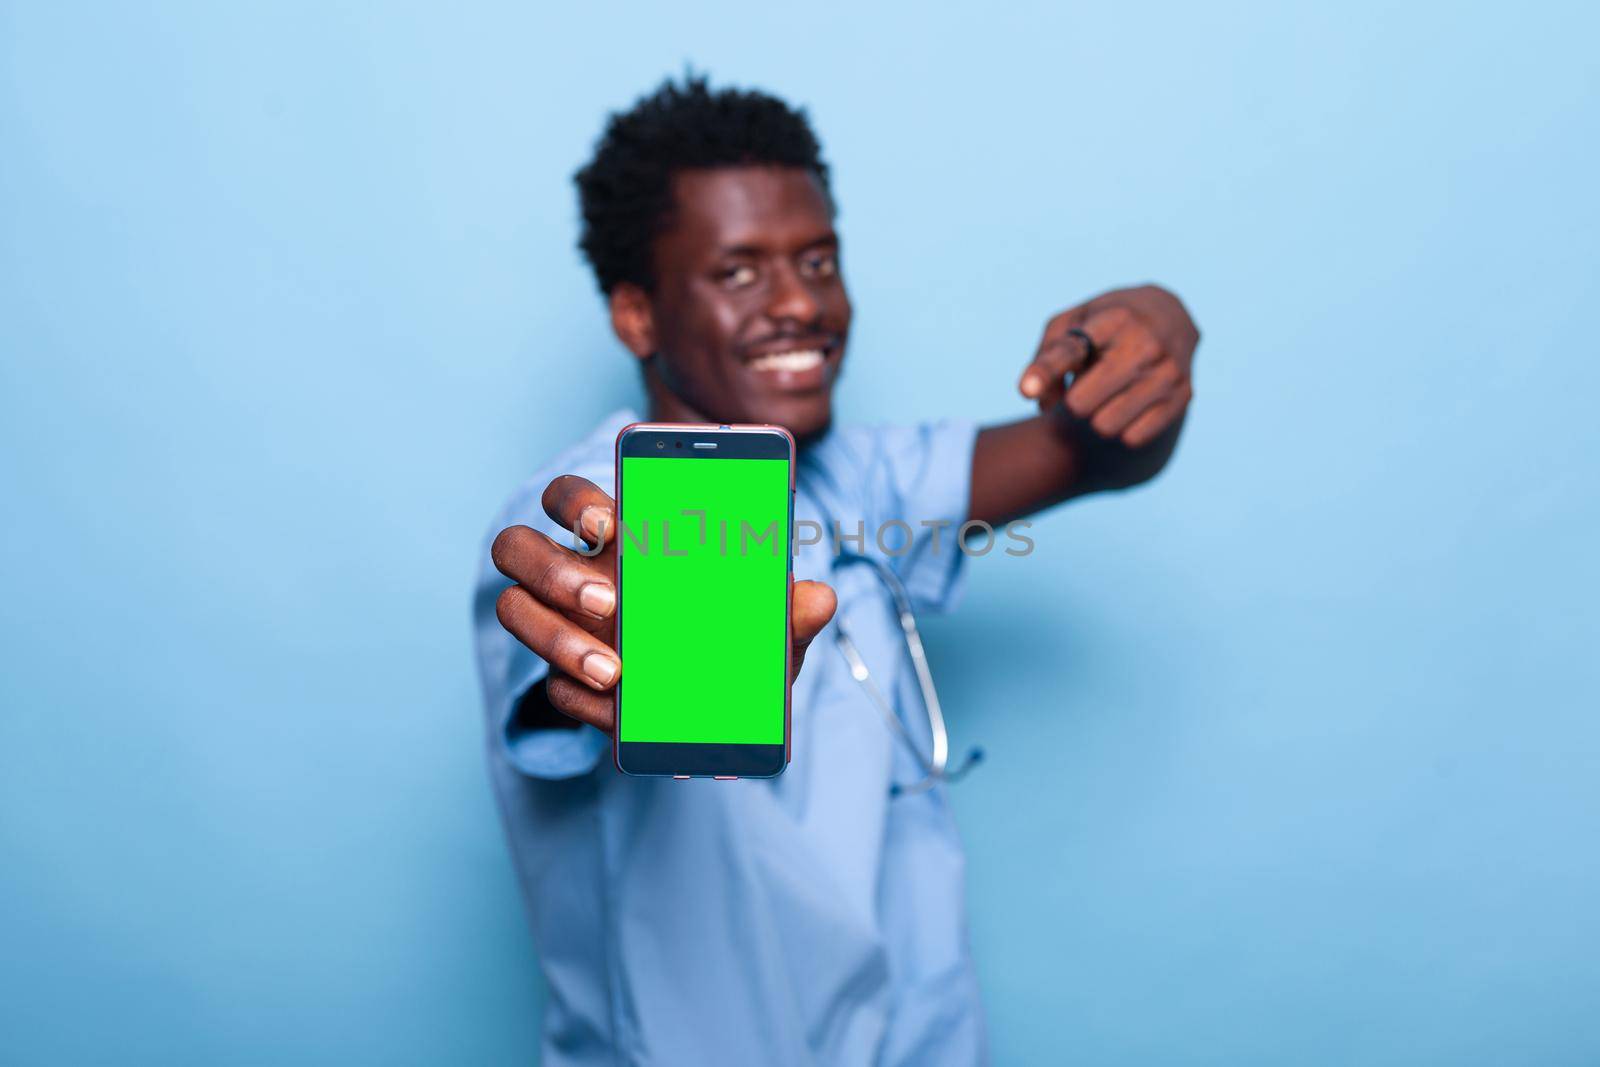 Nurse showing smartphone with vertical green screen by DCStudio